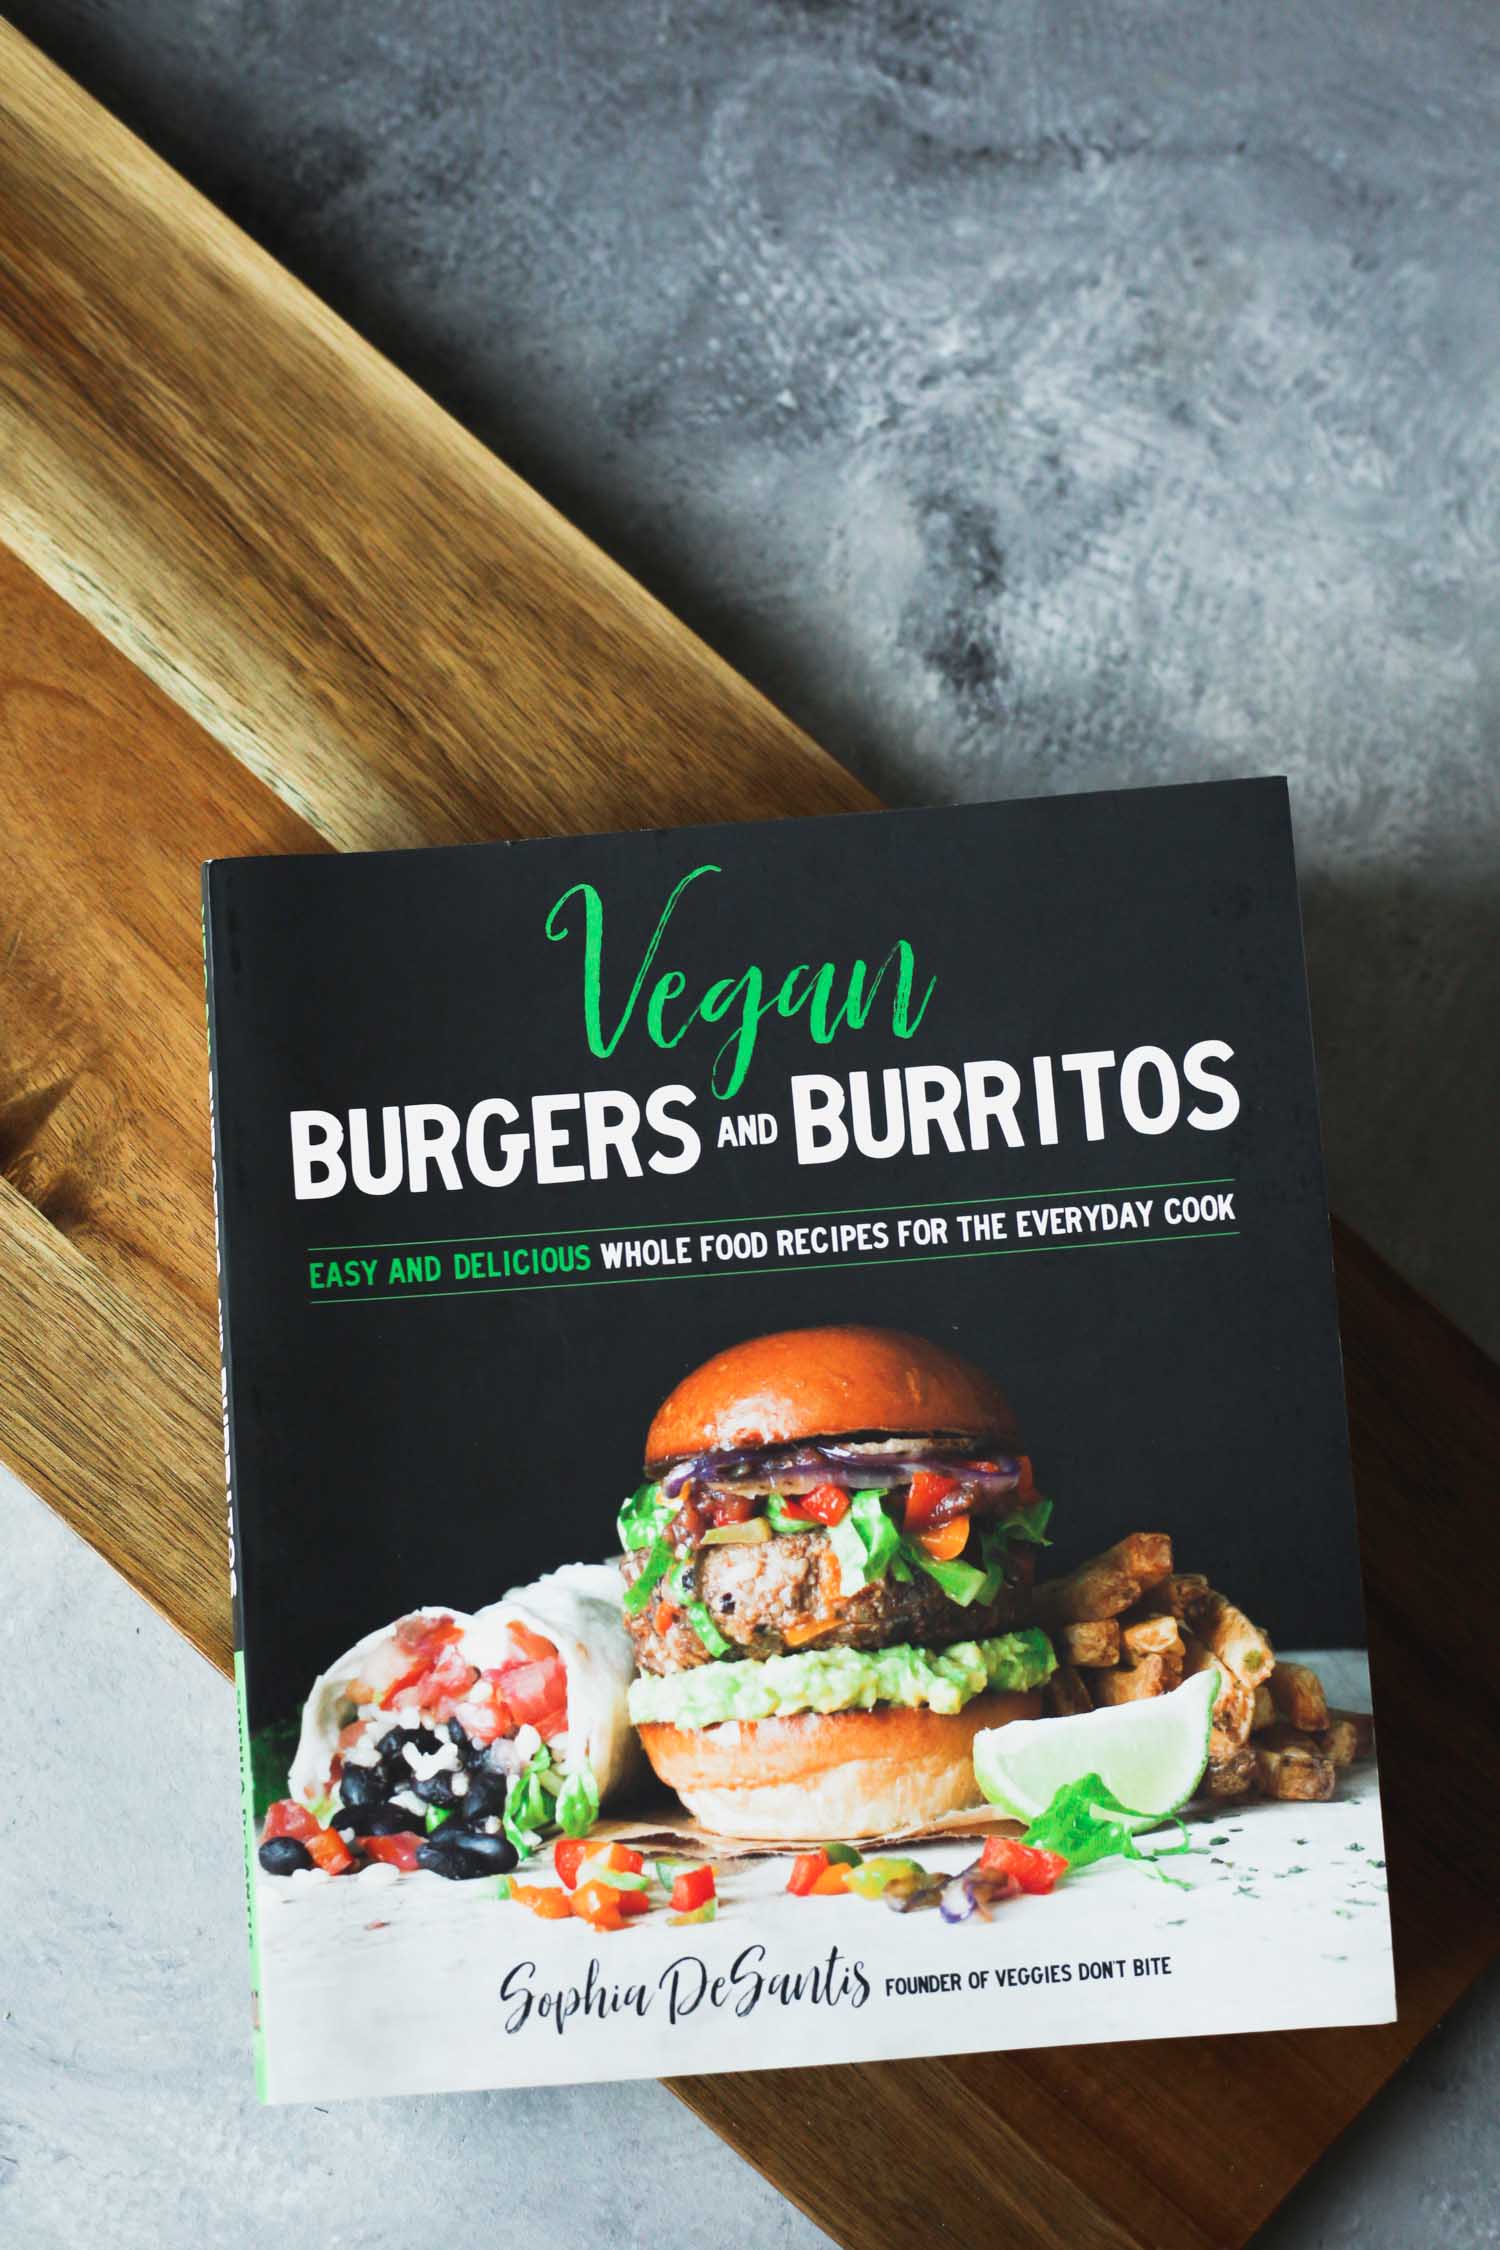 Vegan Burgers and burritos cookbook by Sophia DeSantos. Photo by Kari of Beautiful Ingredient.